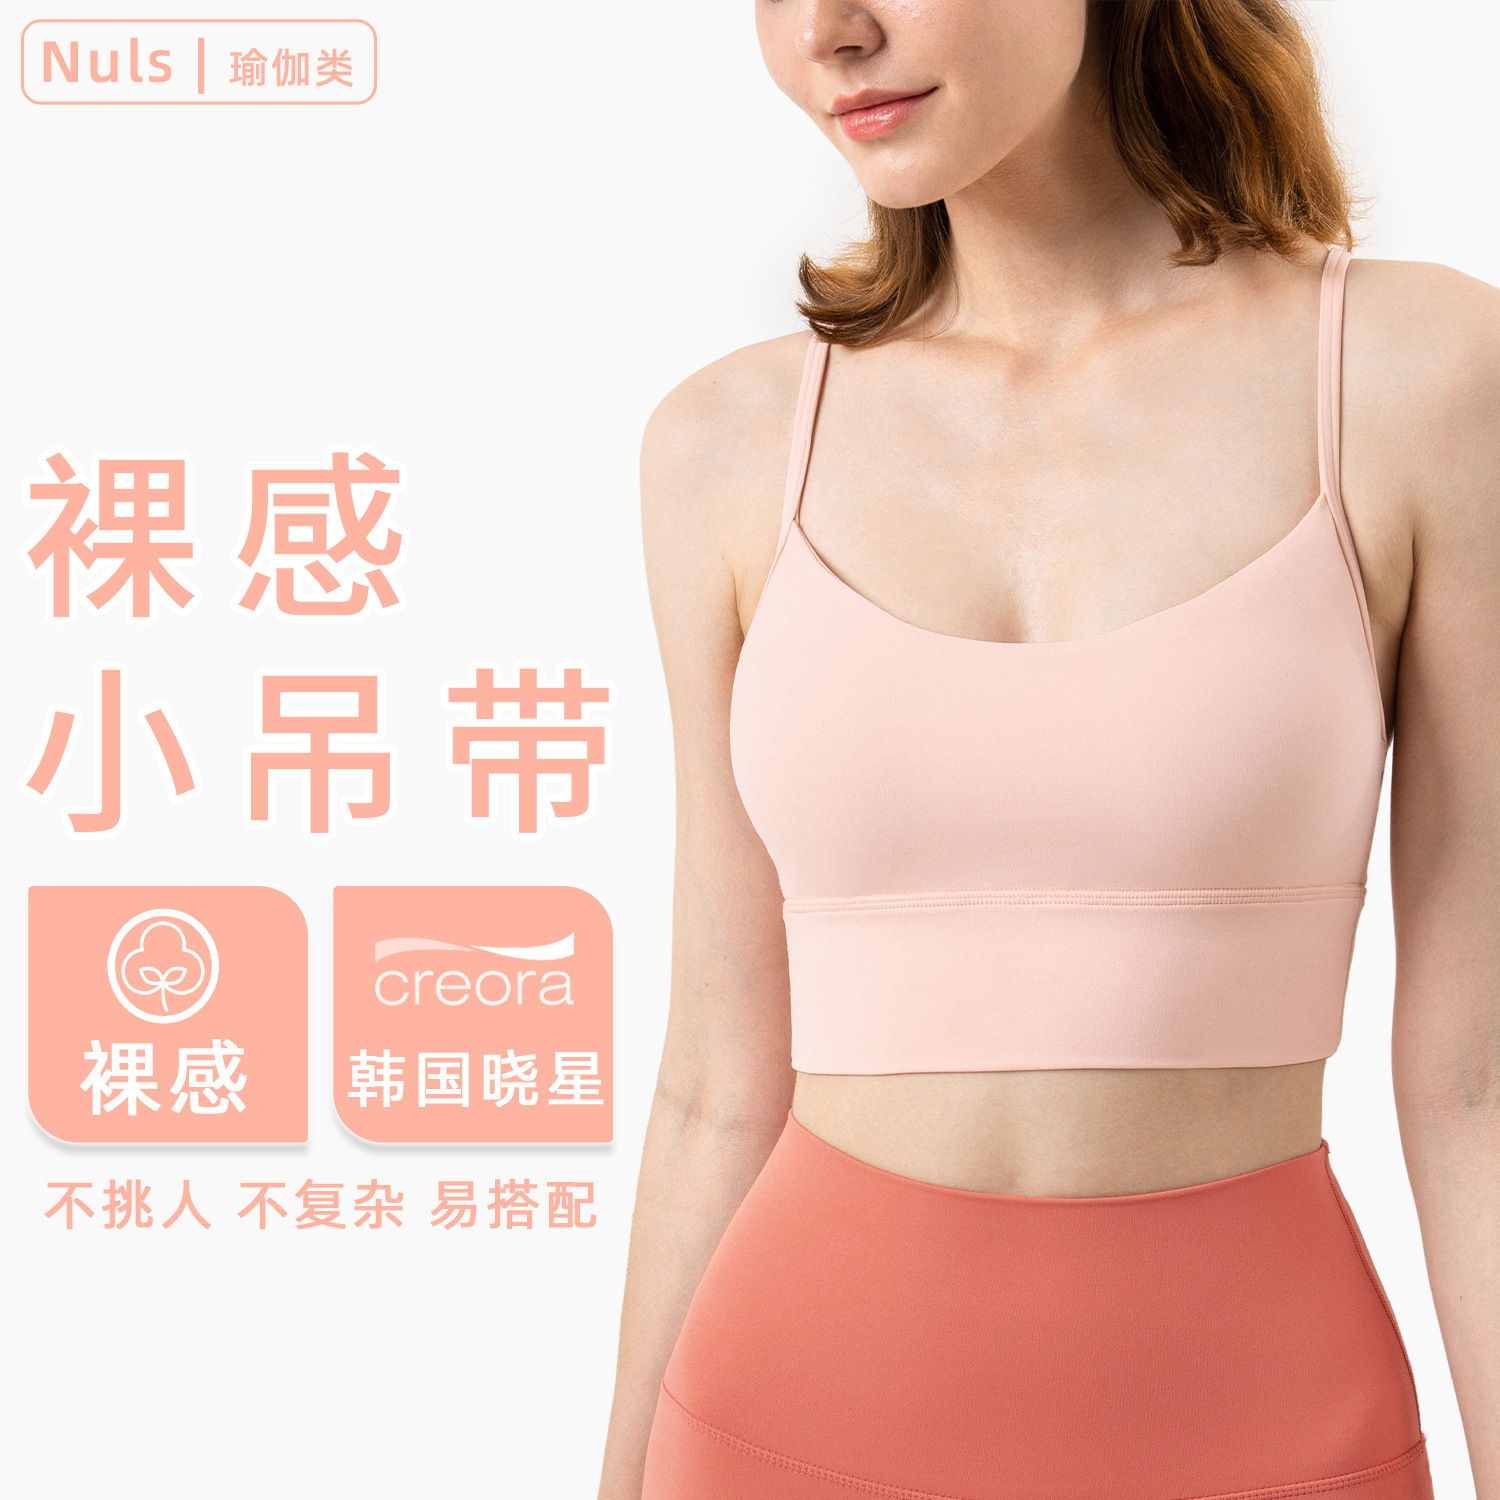 NULS新款裸感瑜伽服背心普拉提运动内衣女夏性感美背健身瑜伽文胸